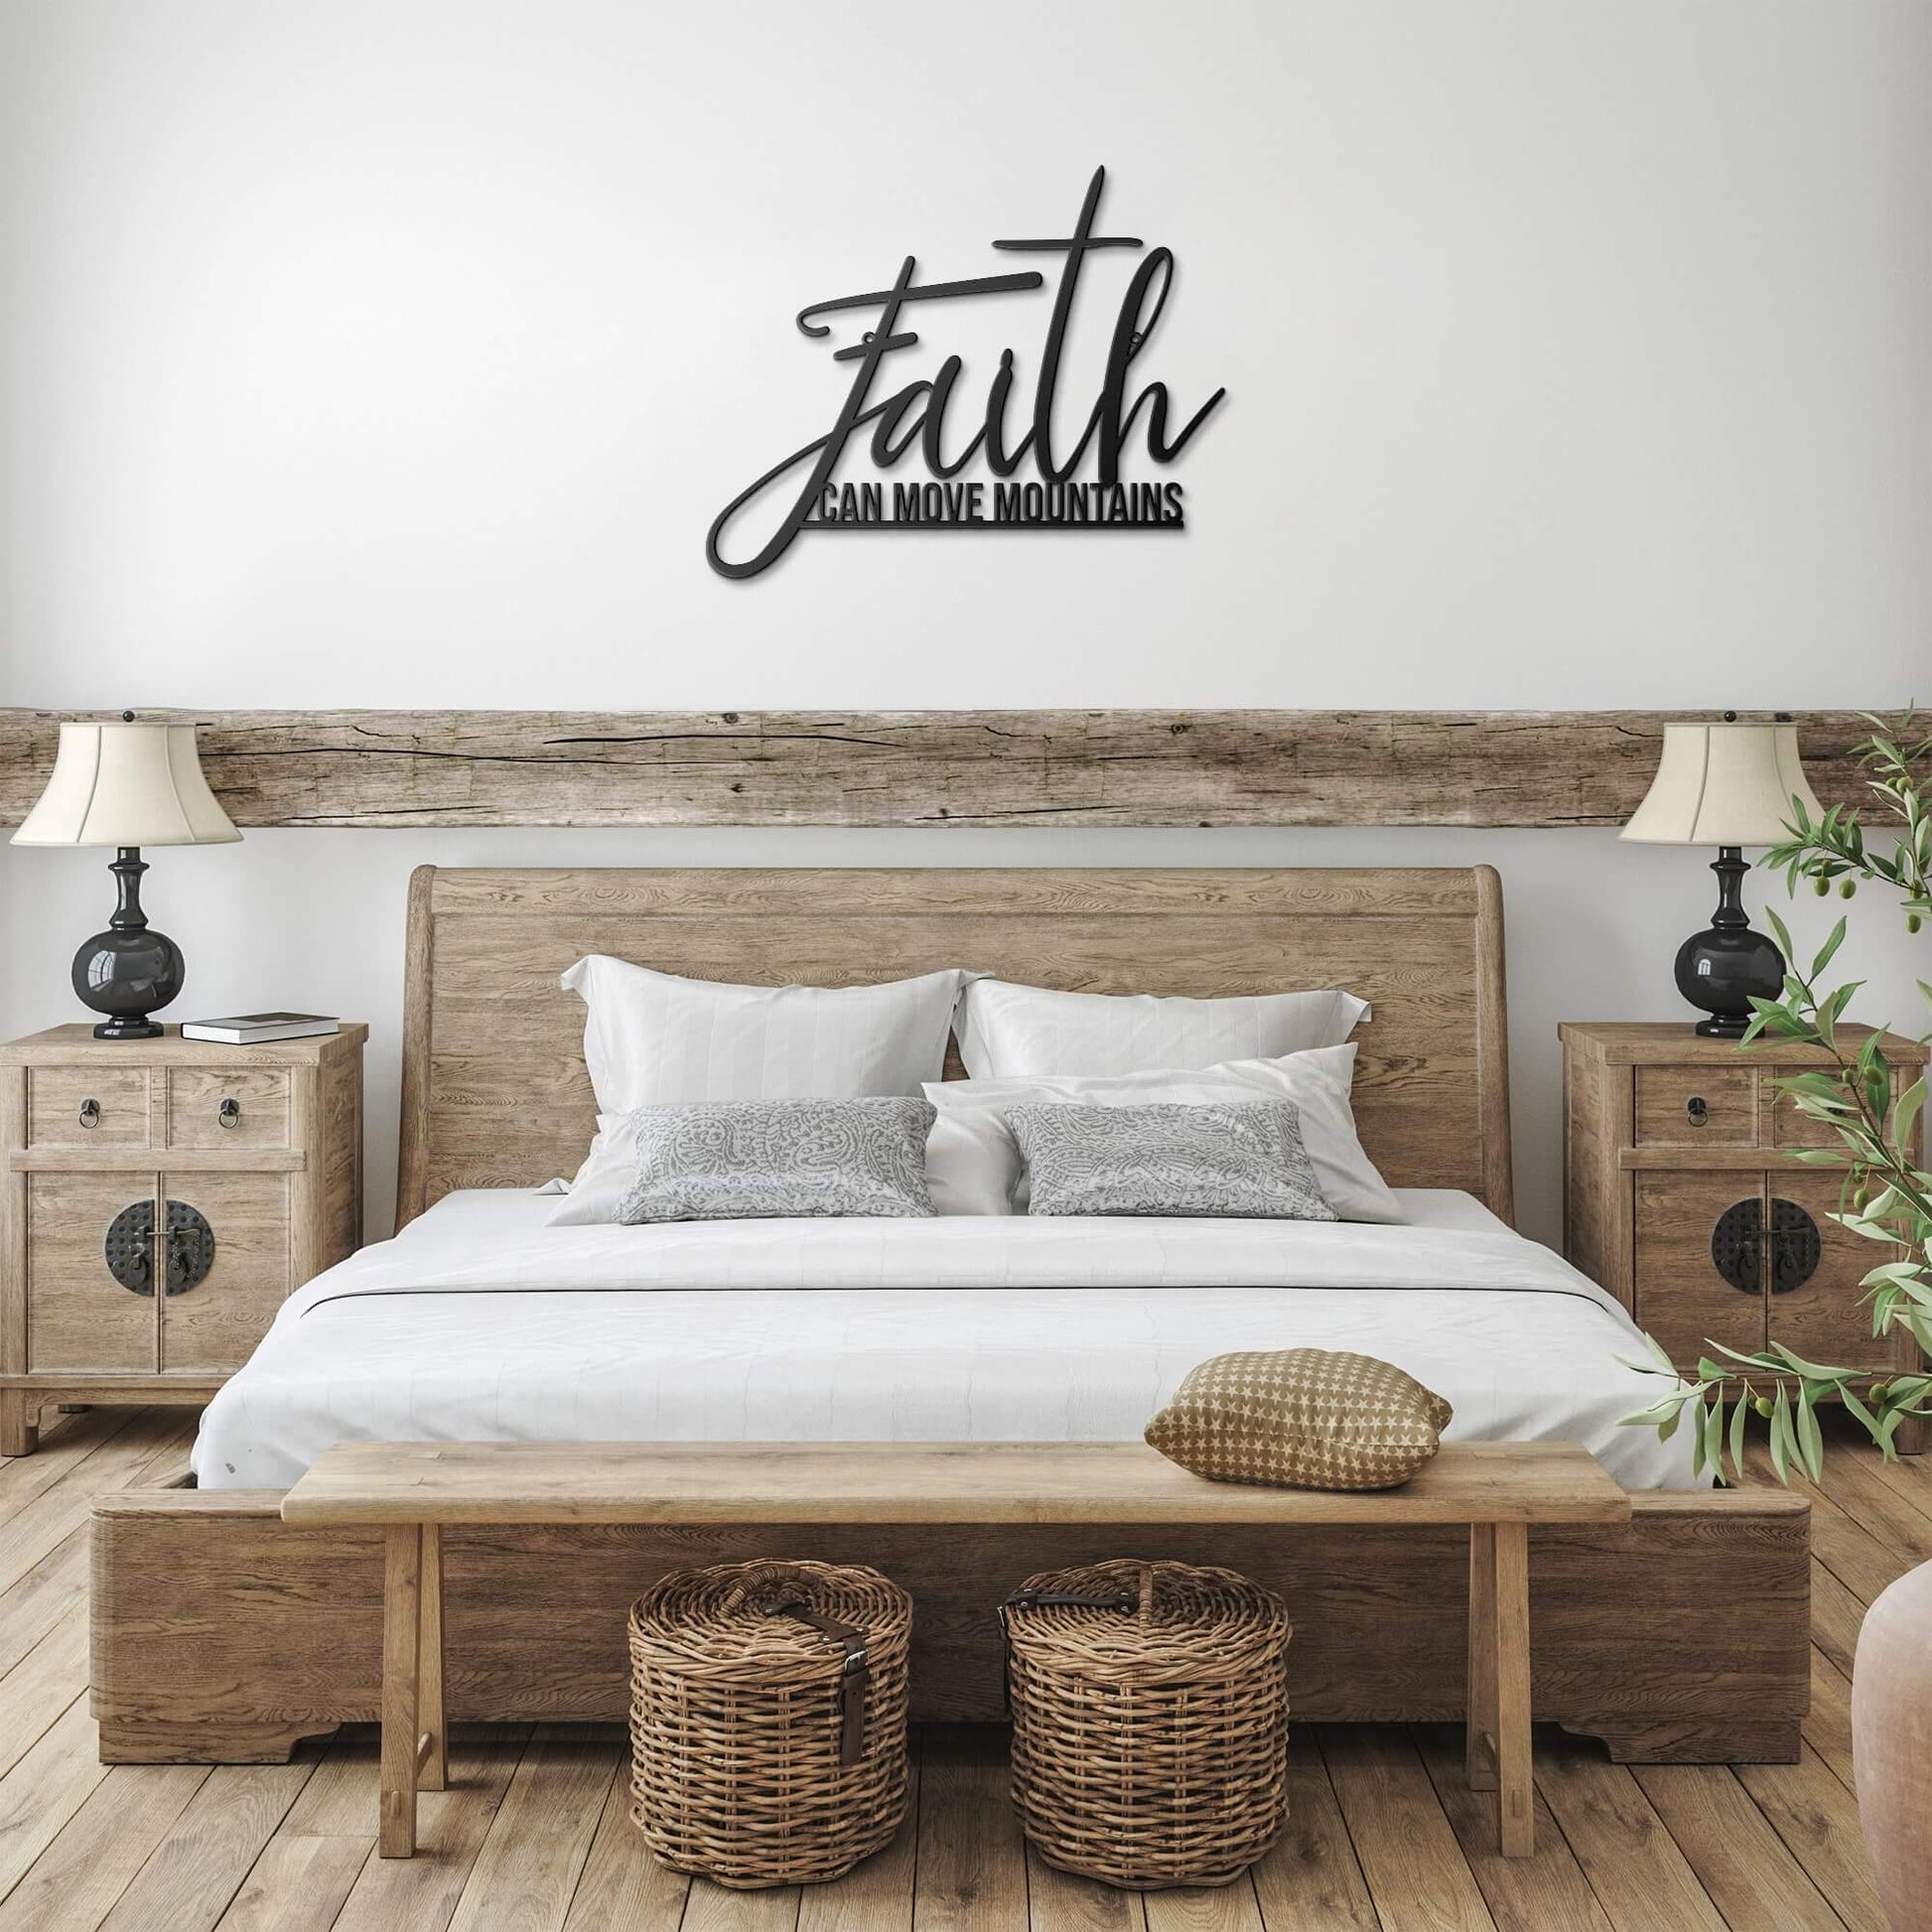 Faith Can Move Mountains Metal Sign - Christian Metal Wall Art - Religious Metal Wall Decor